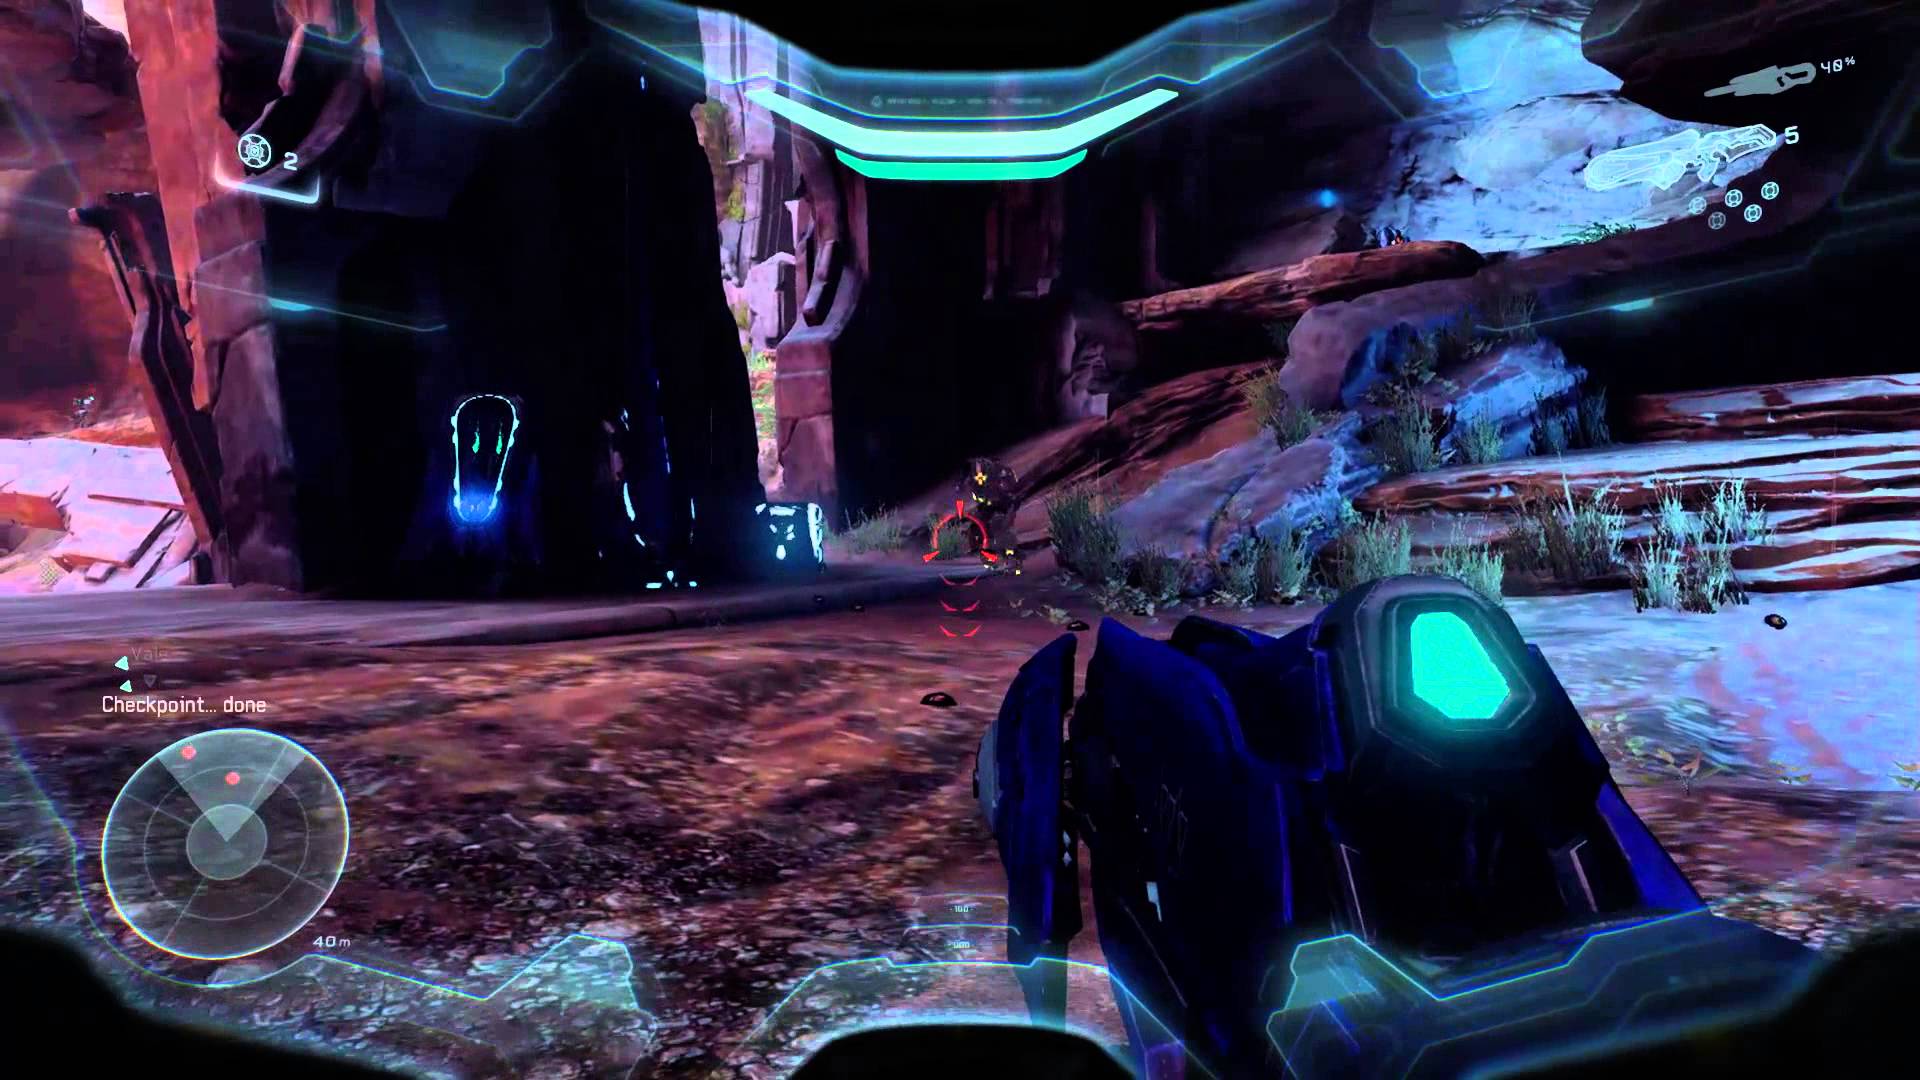 Halo 5: Guardians – Swords of Sanghelios Gameplay Capture